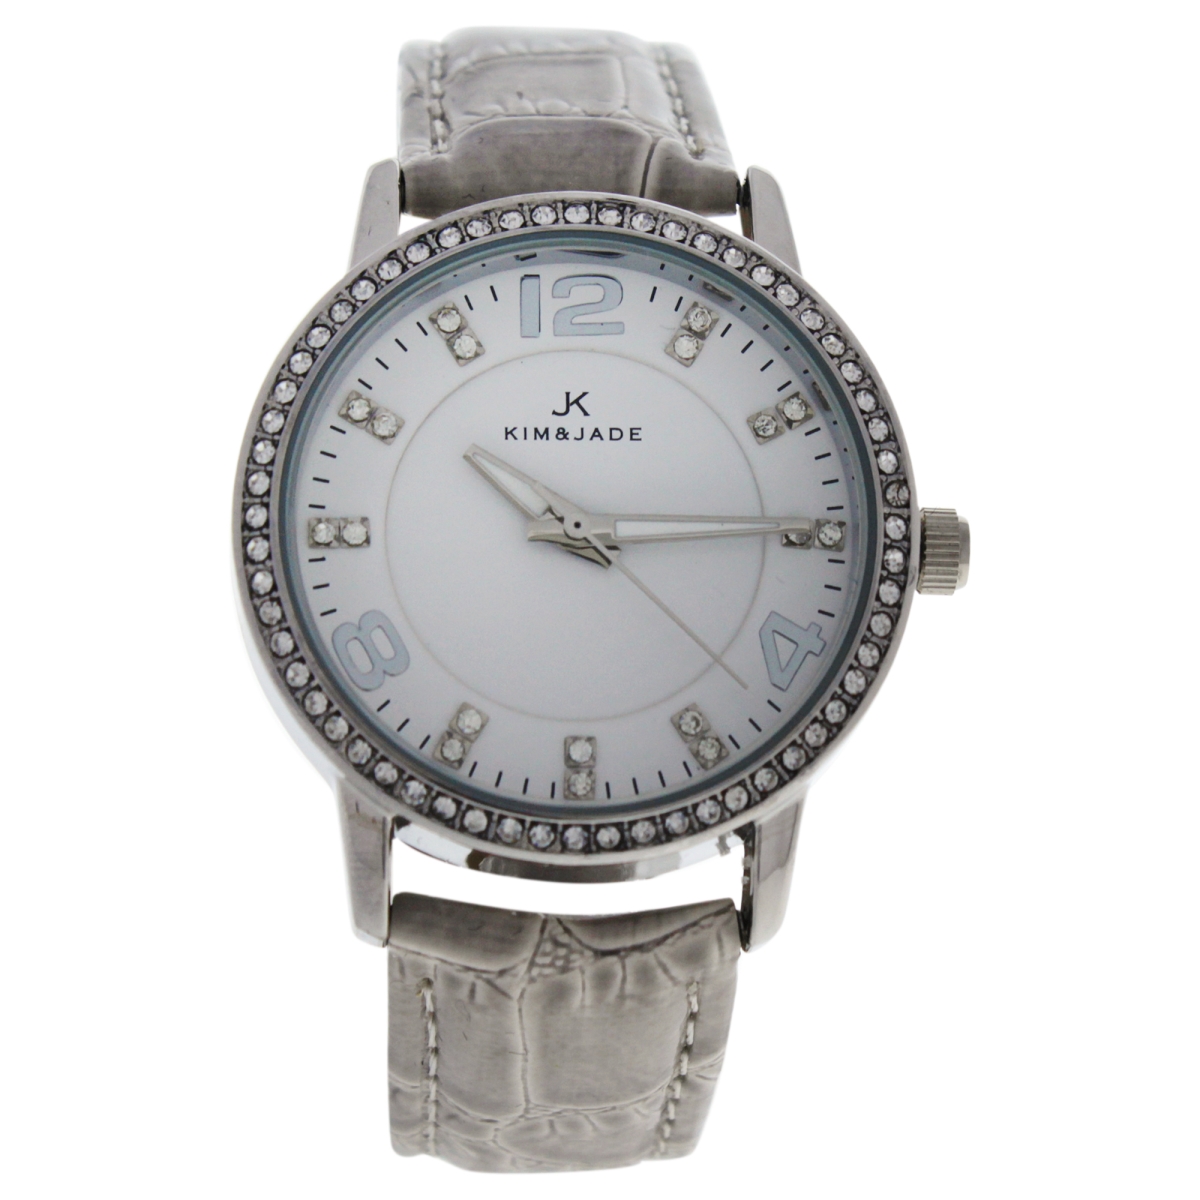 W-wat-1410 Silver & Grey Leather Strap Watch For Women - 2031l-sgw